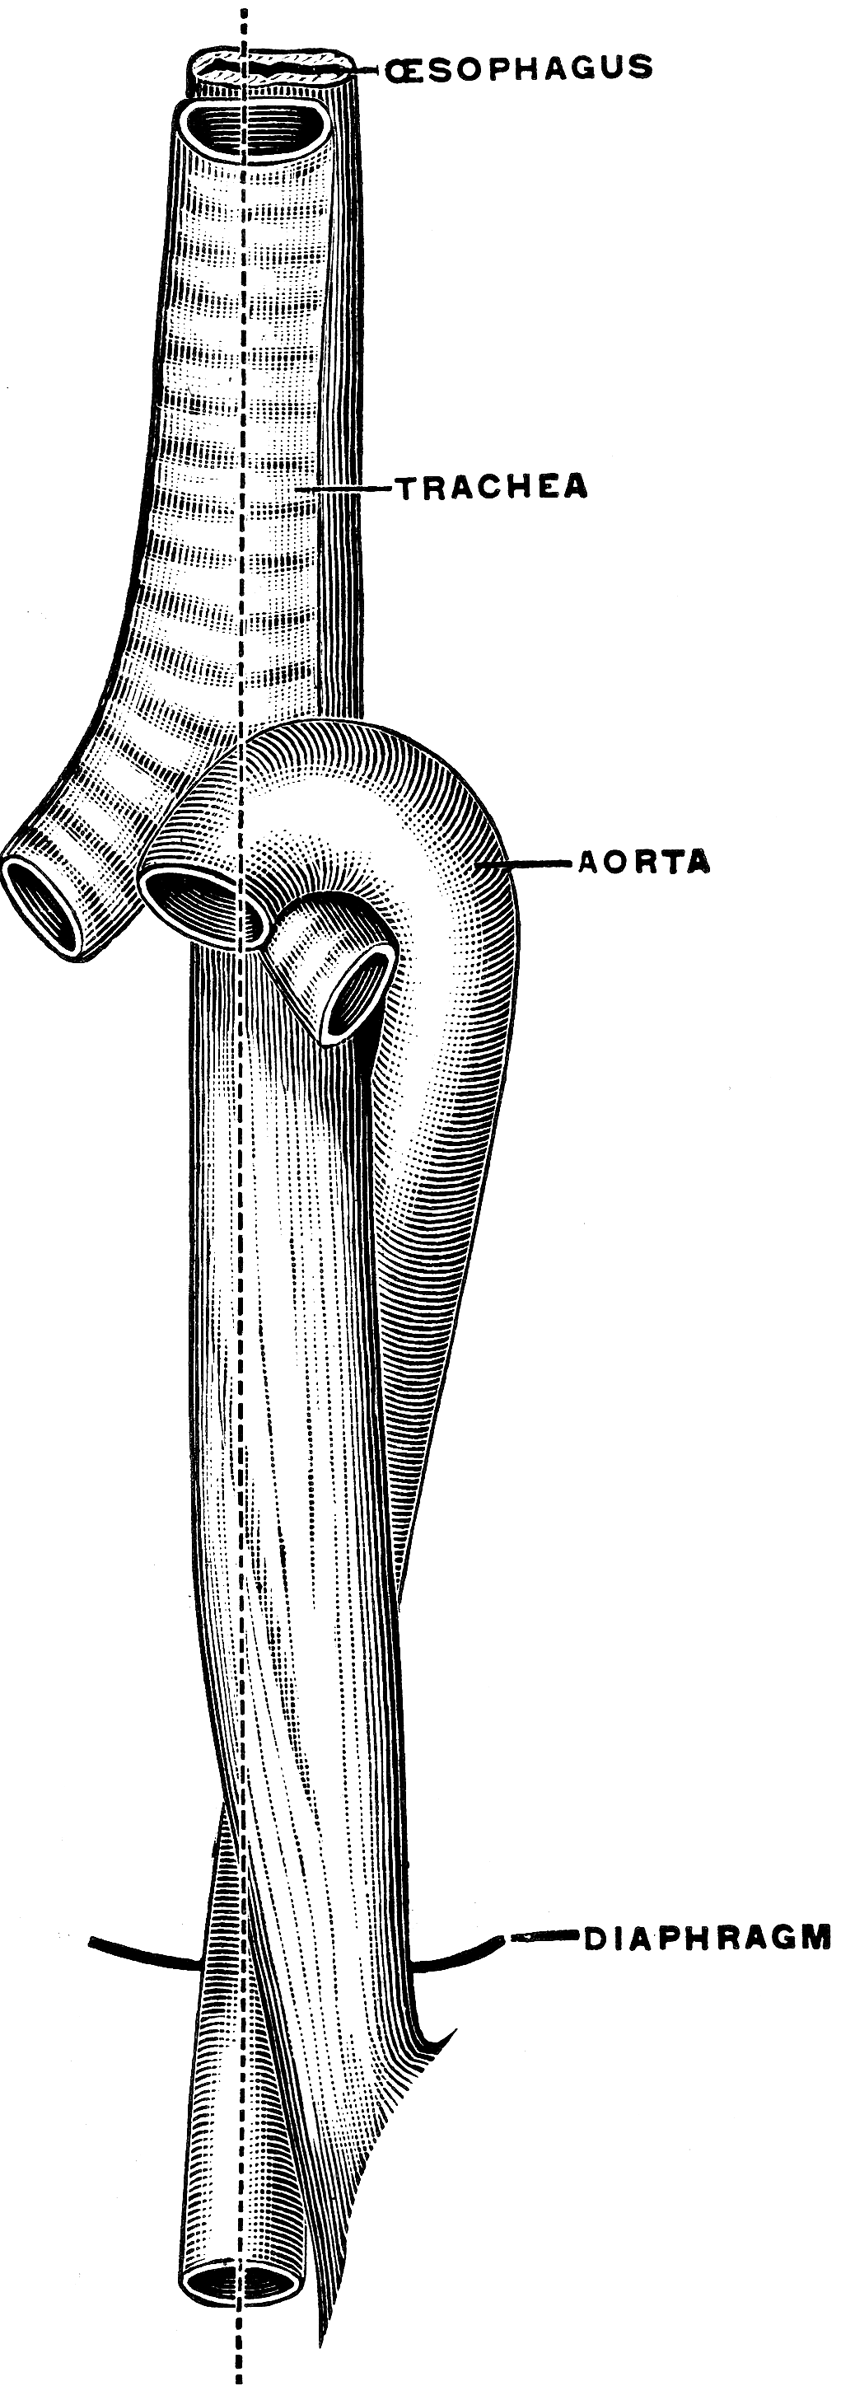 Esophagus, Trachea, and Aorta in an Infant | ClipArt ETC